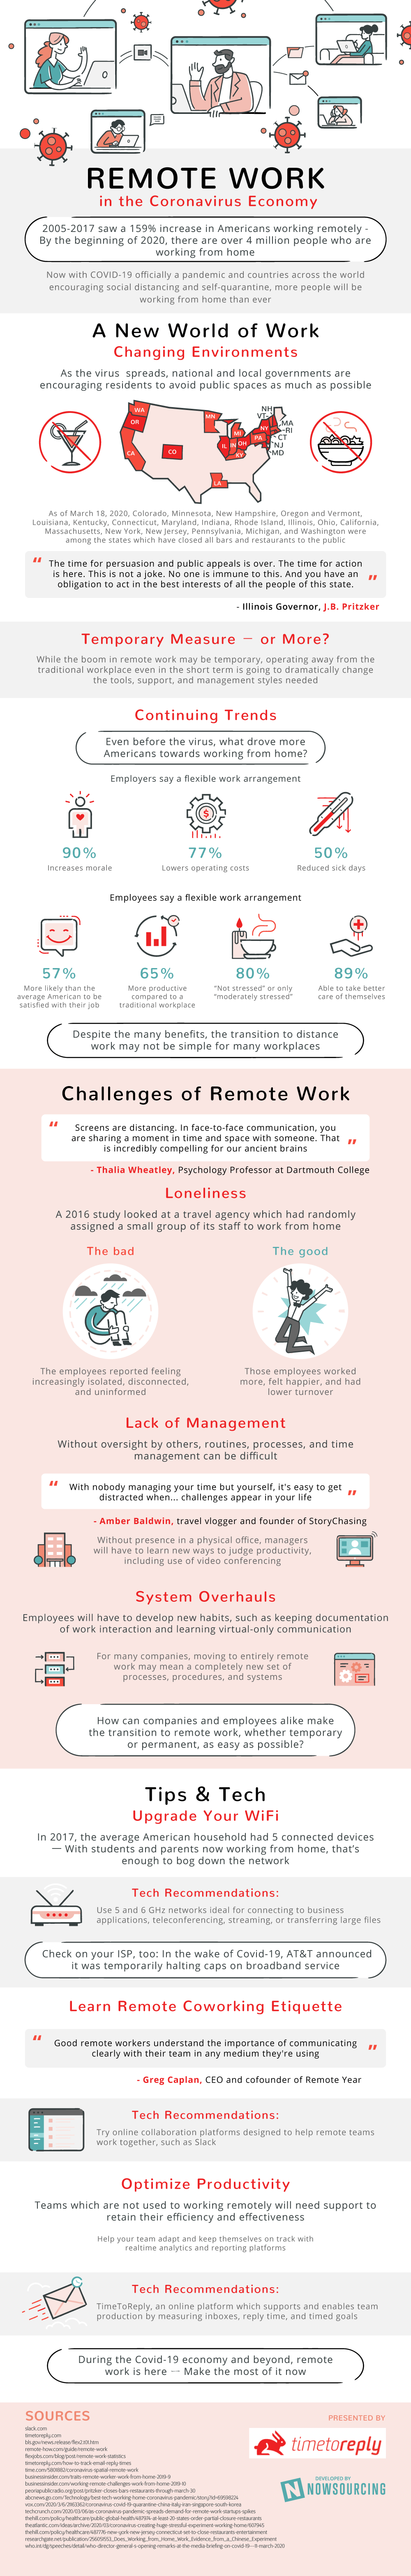 Remote Work in the Coronavirus Economy